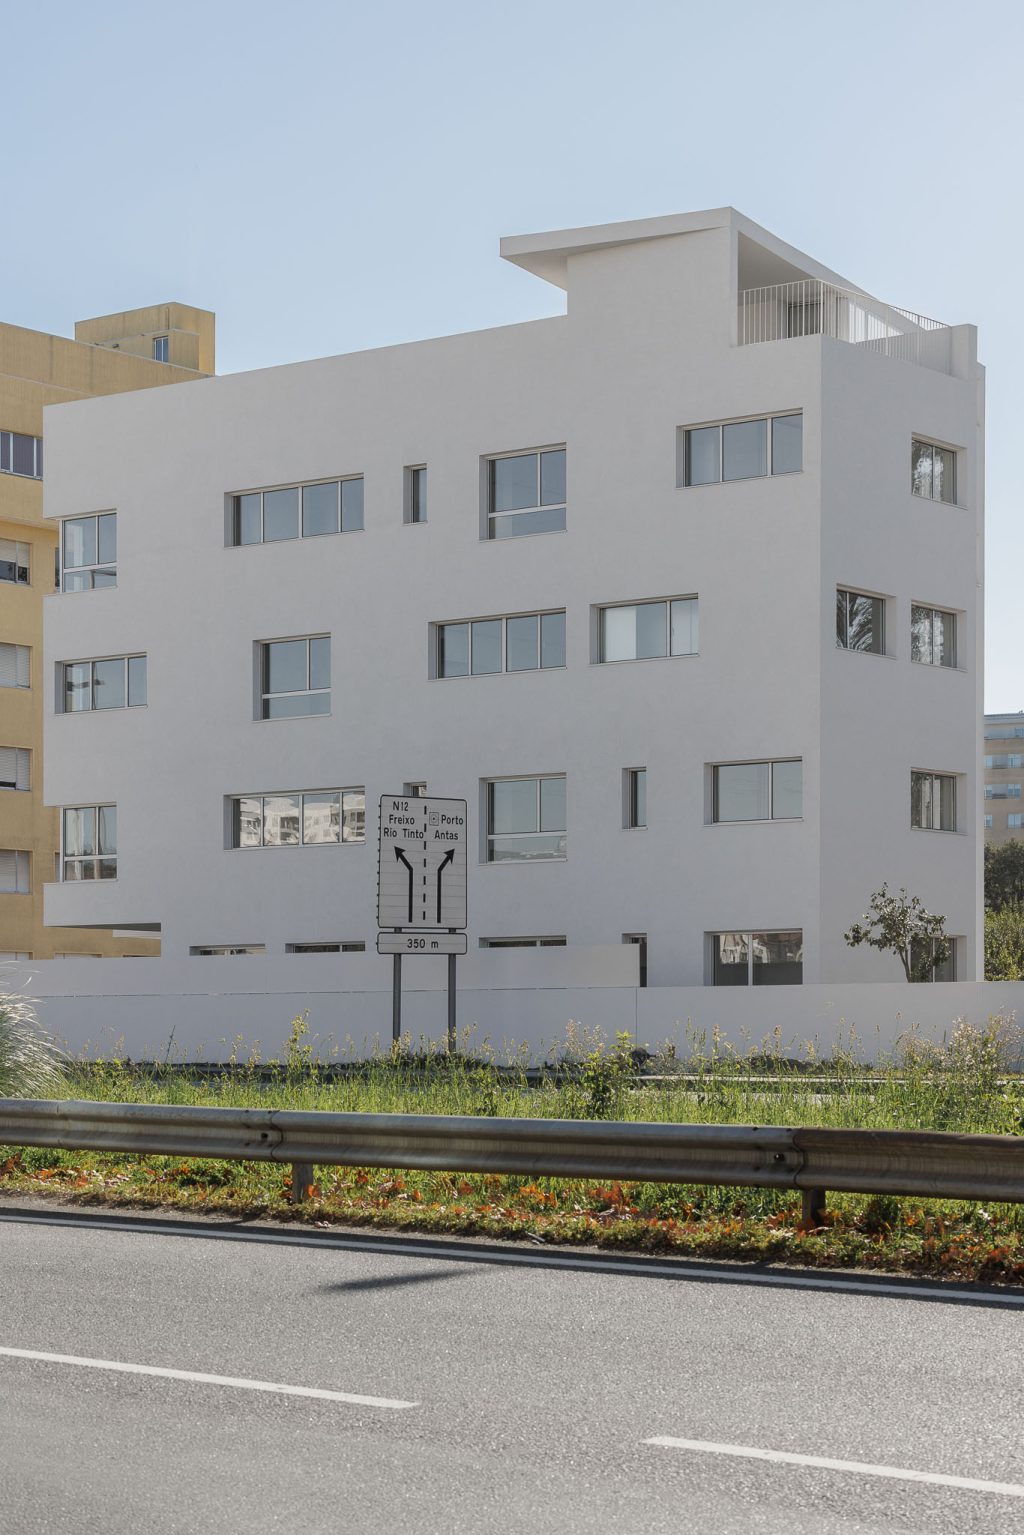 Nova Rio Housing σύγχρονη αρχιτεκτονική που προκαλεί τις συμβάσεις. Αντόνιο Πάολο Μάρκες